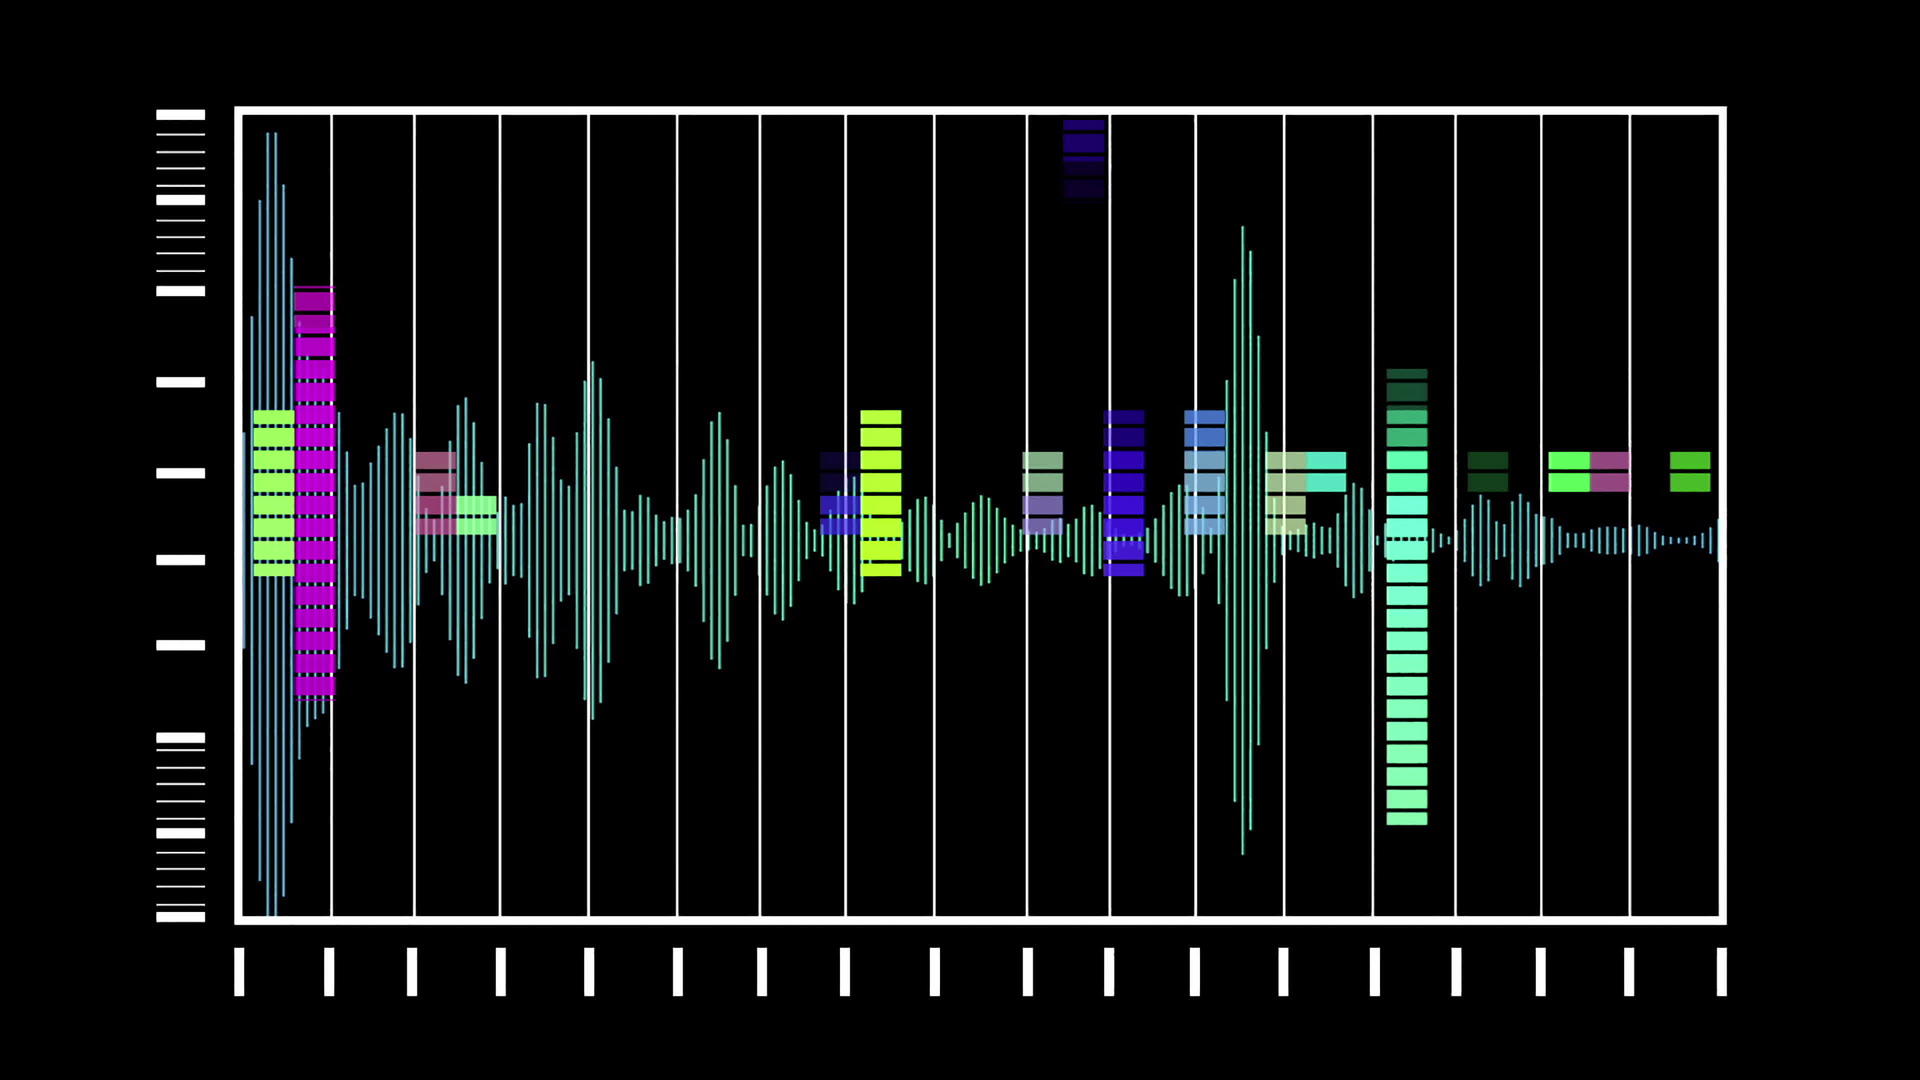 4k声音平衡器移动条和声波监控视频的预览图